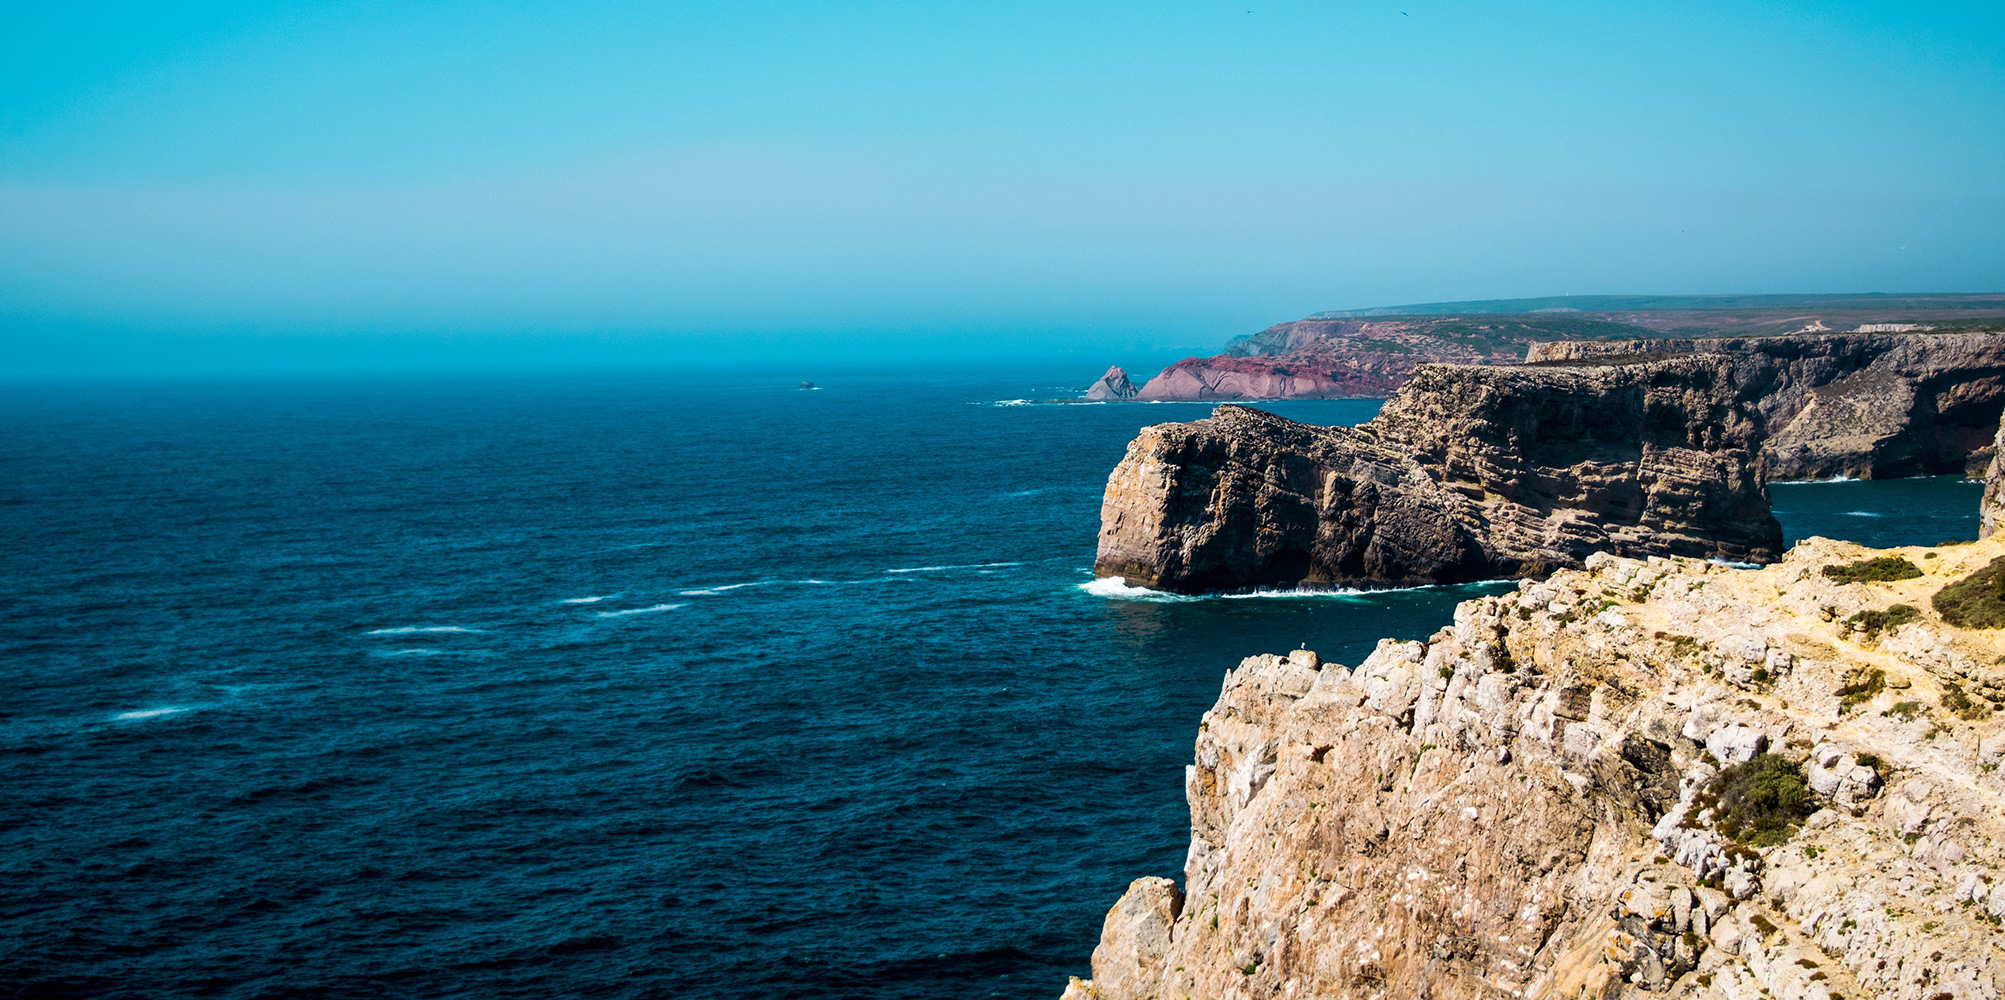 Ocean with rocky cliffs